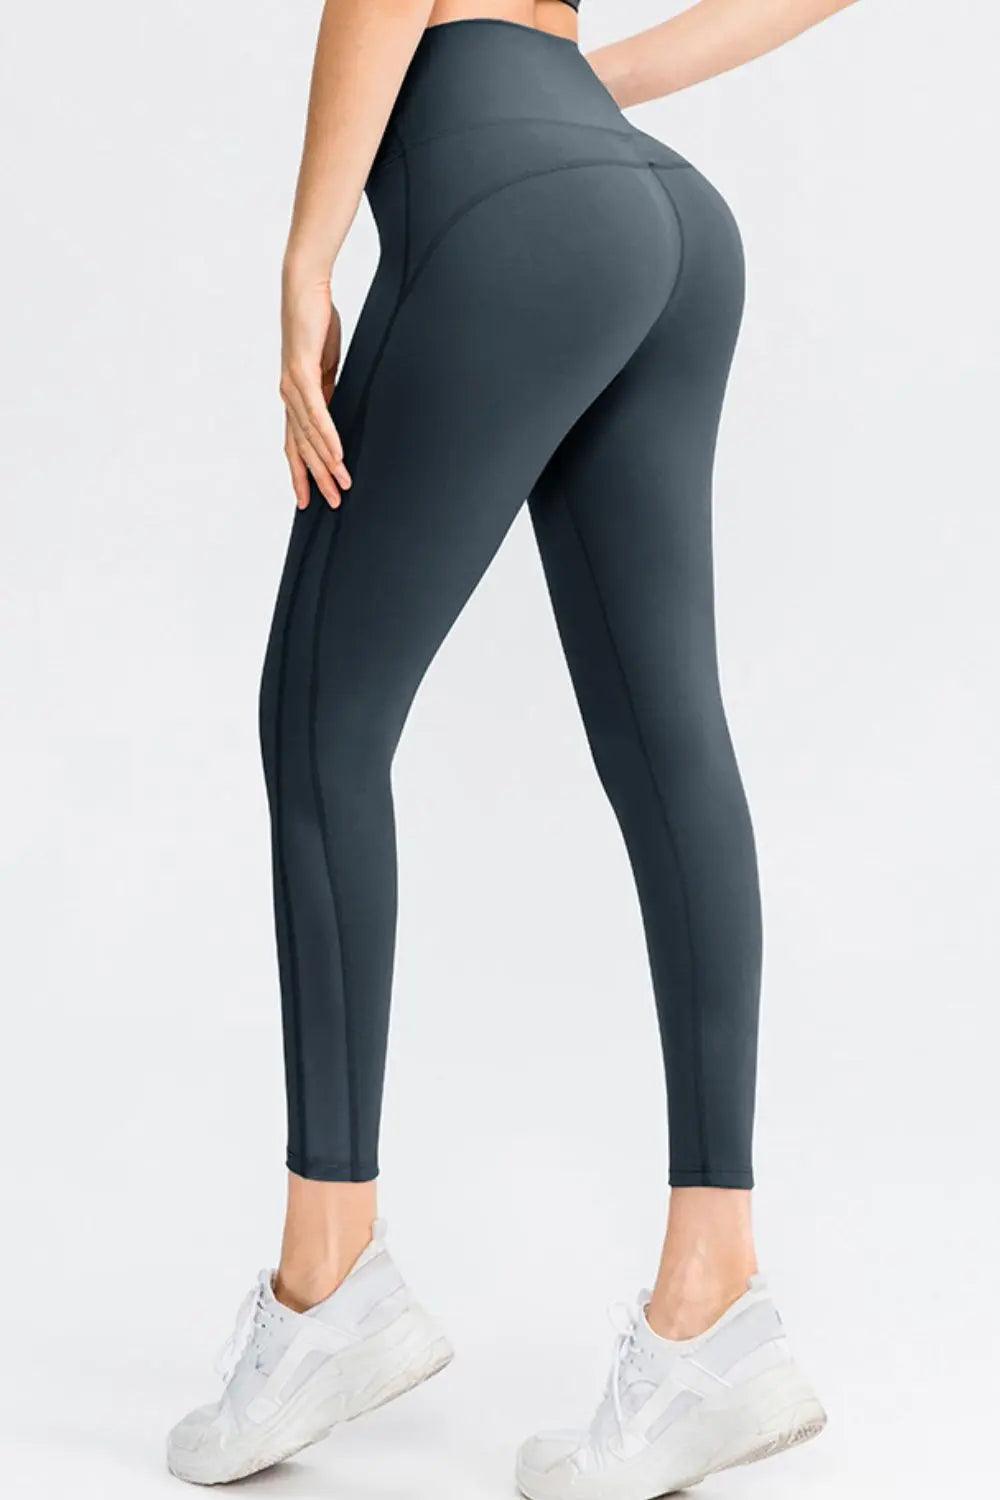 Wide Waistband Slim Fit Long Sports Pants - Elena Rae Co.